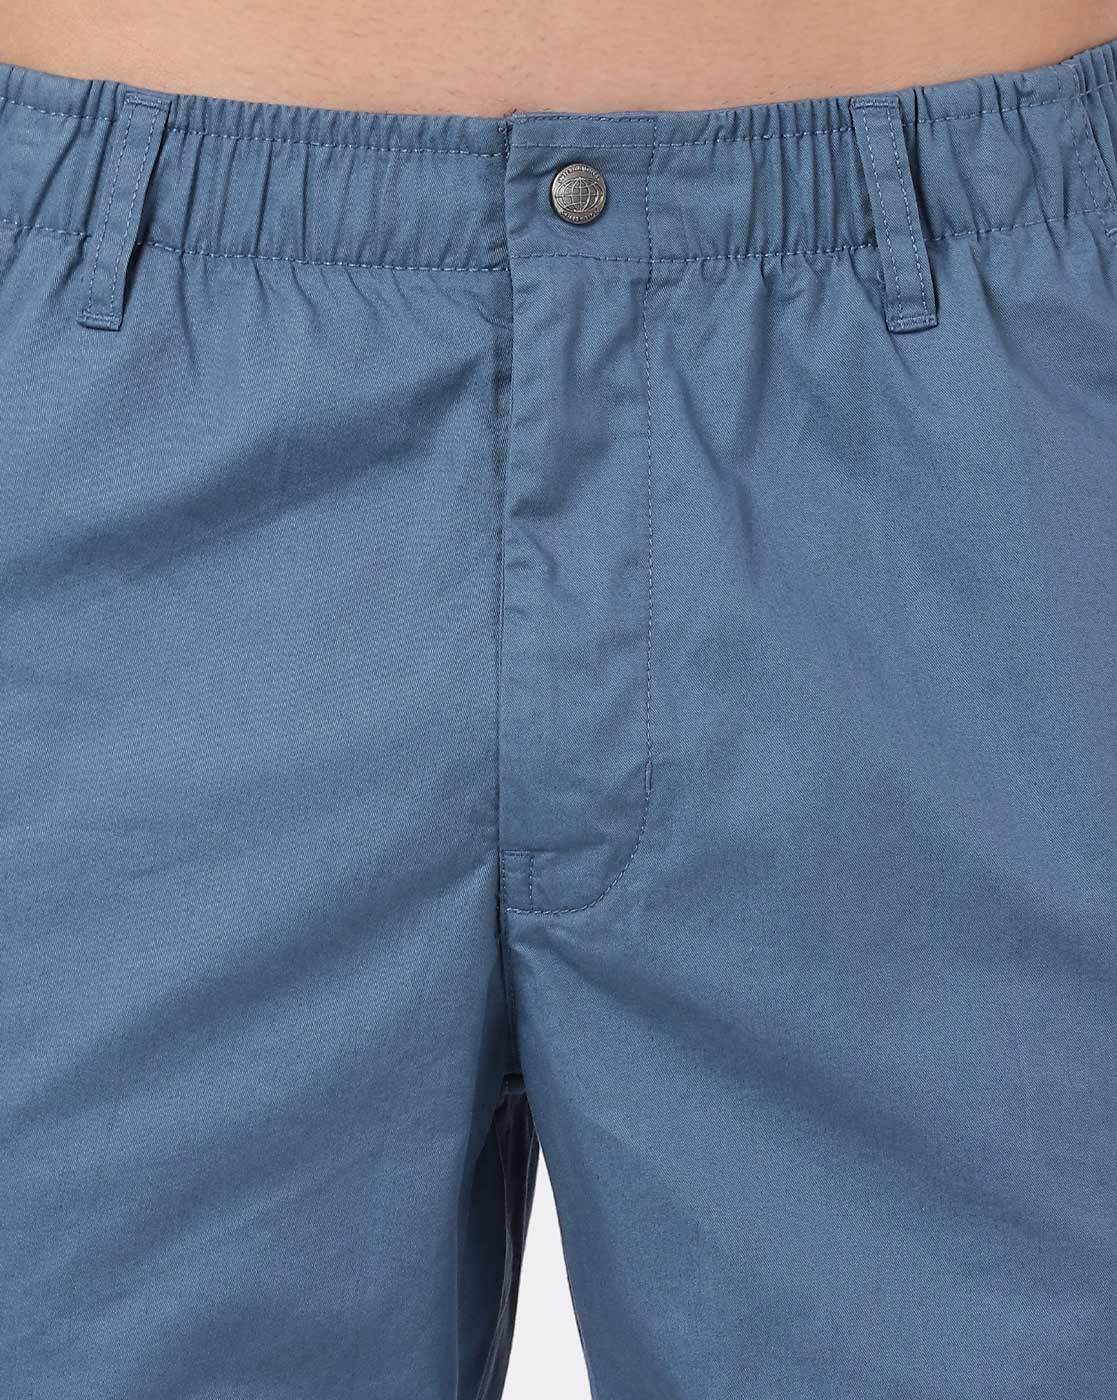 Buy Blue Shorts for Men by Jockey Online